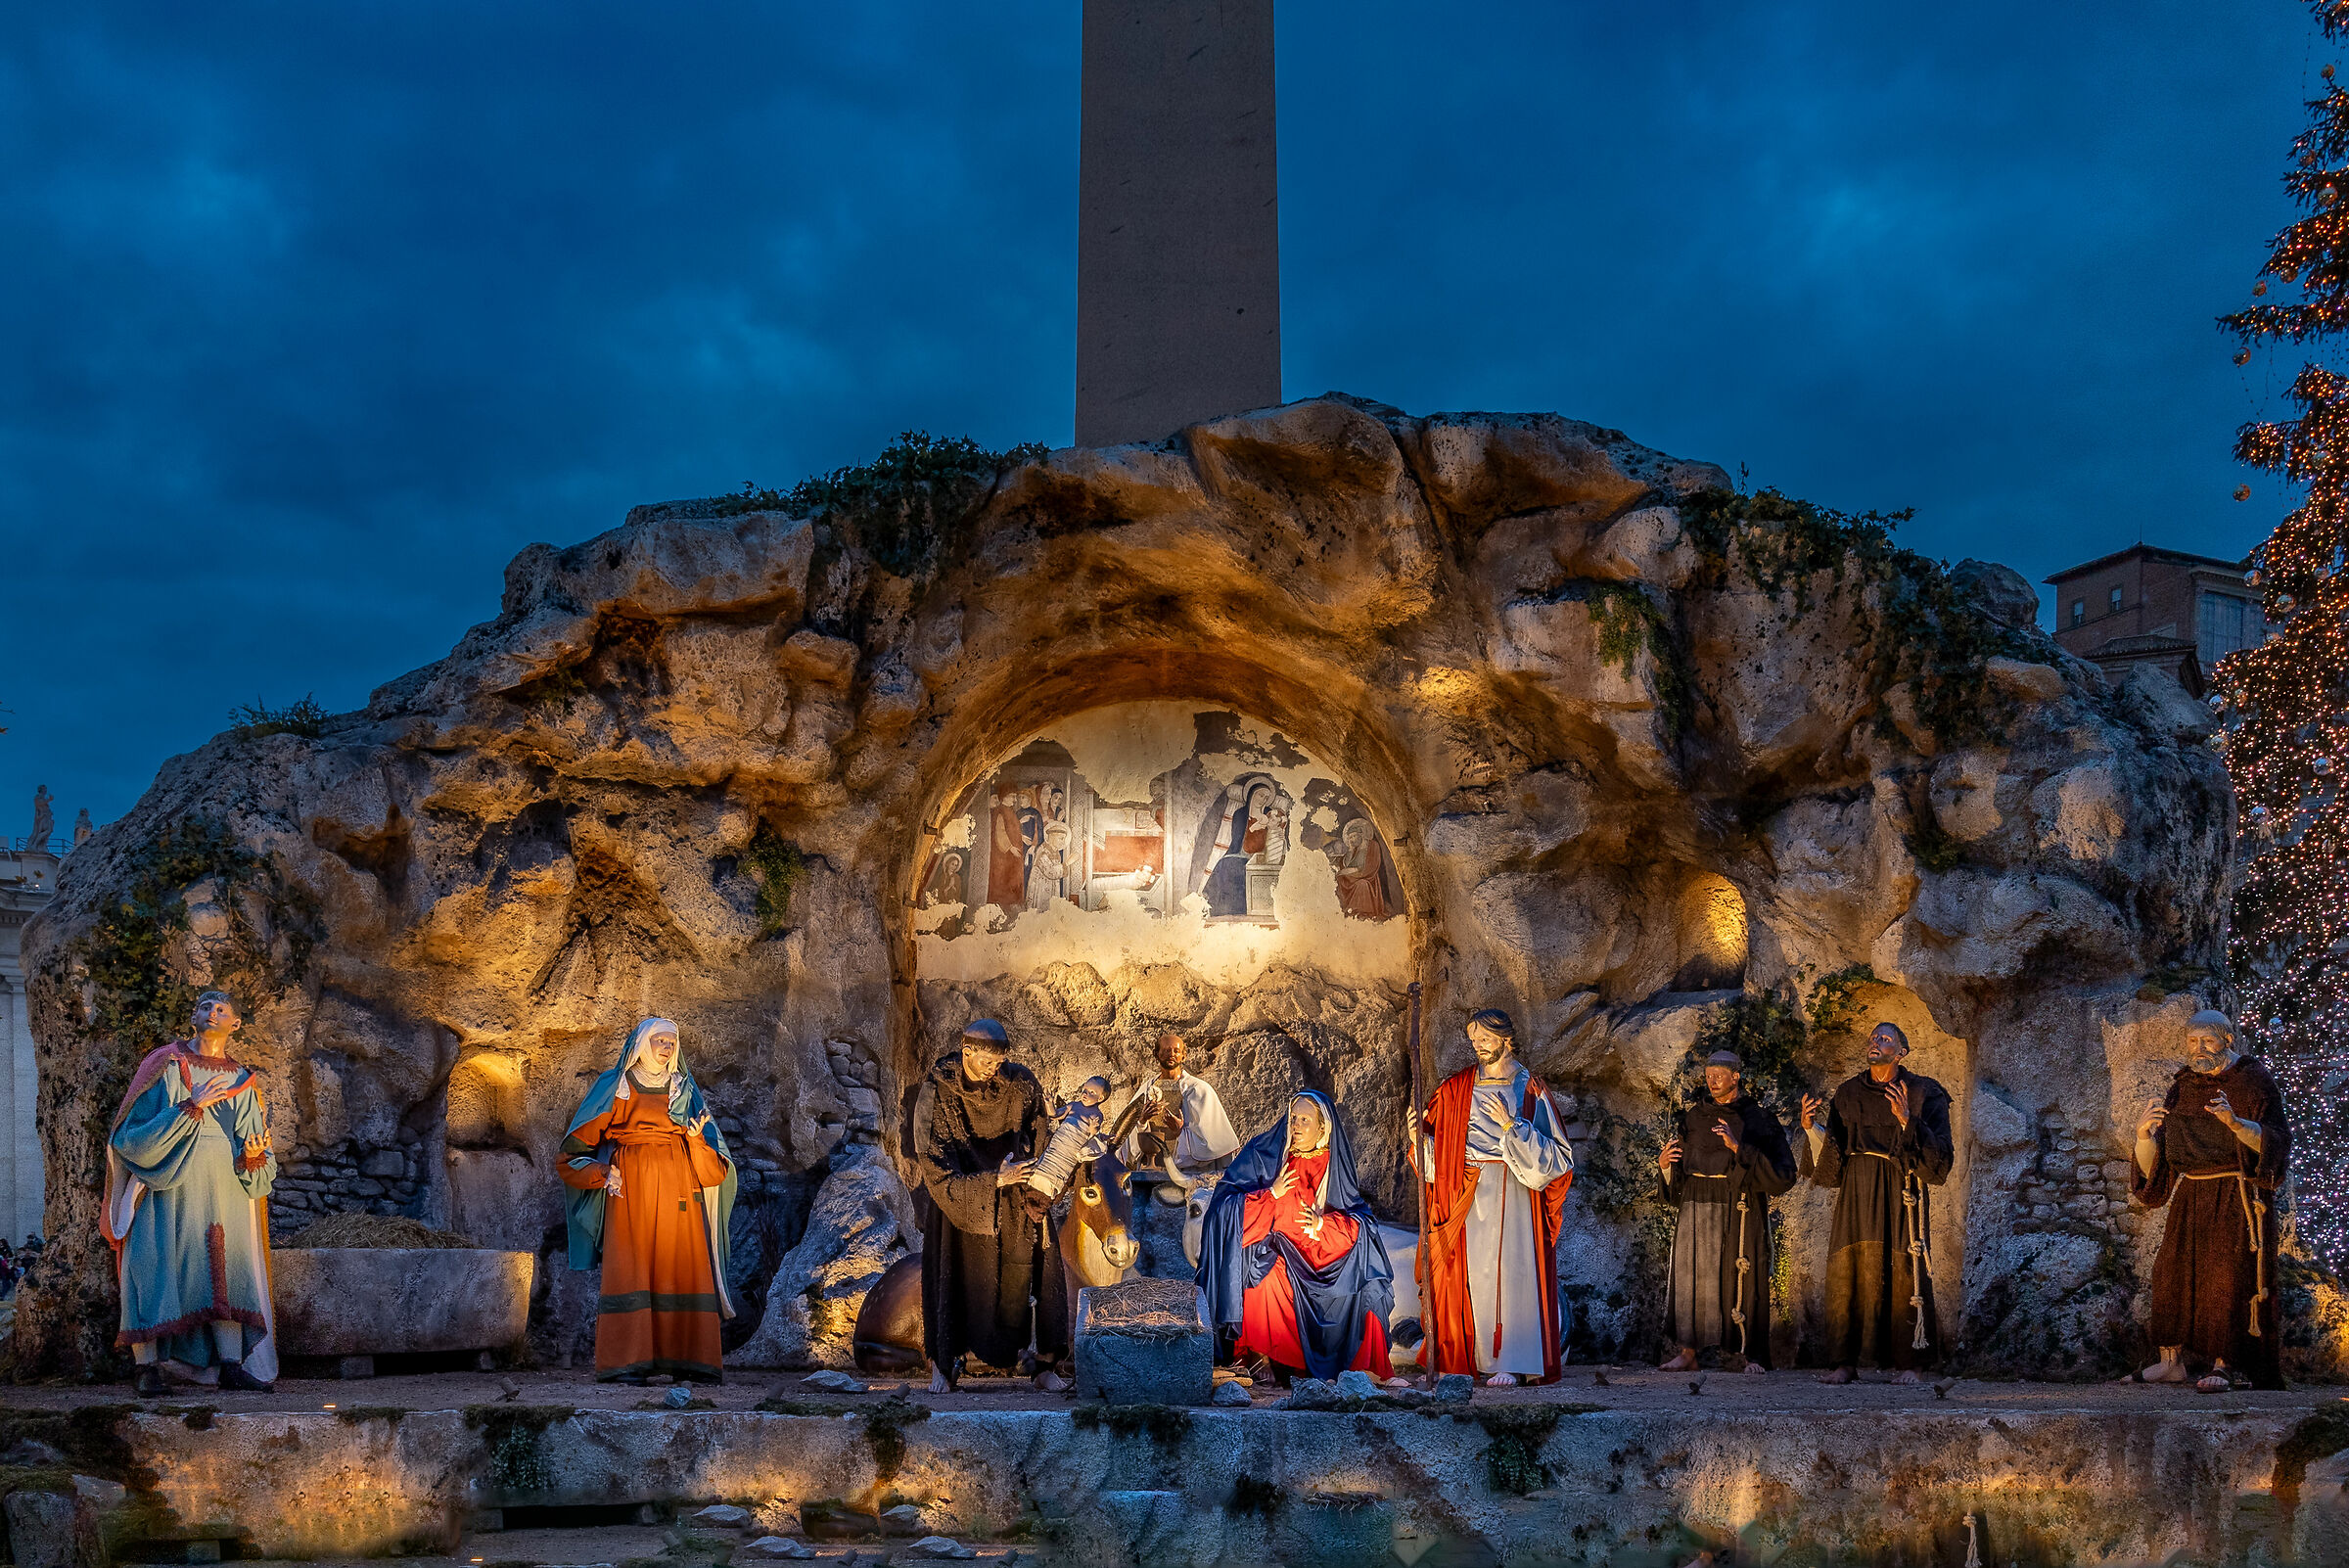 The Nativity Scene in St. Peter's Square...